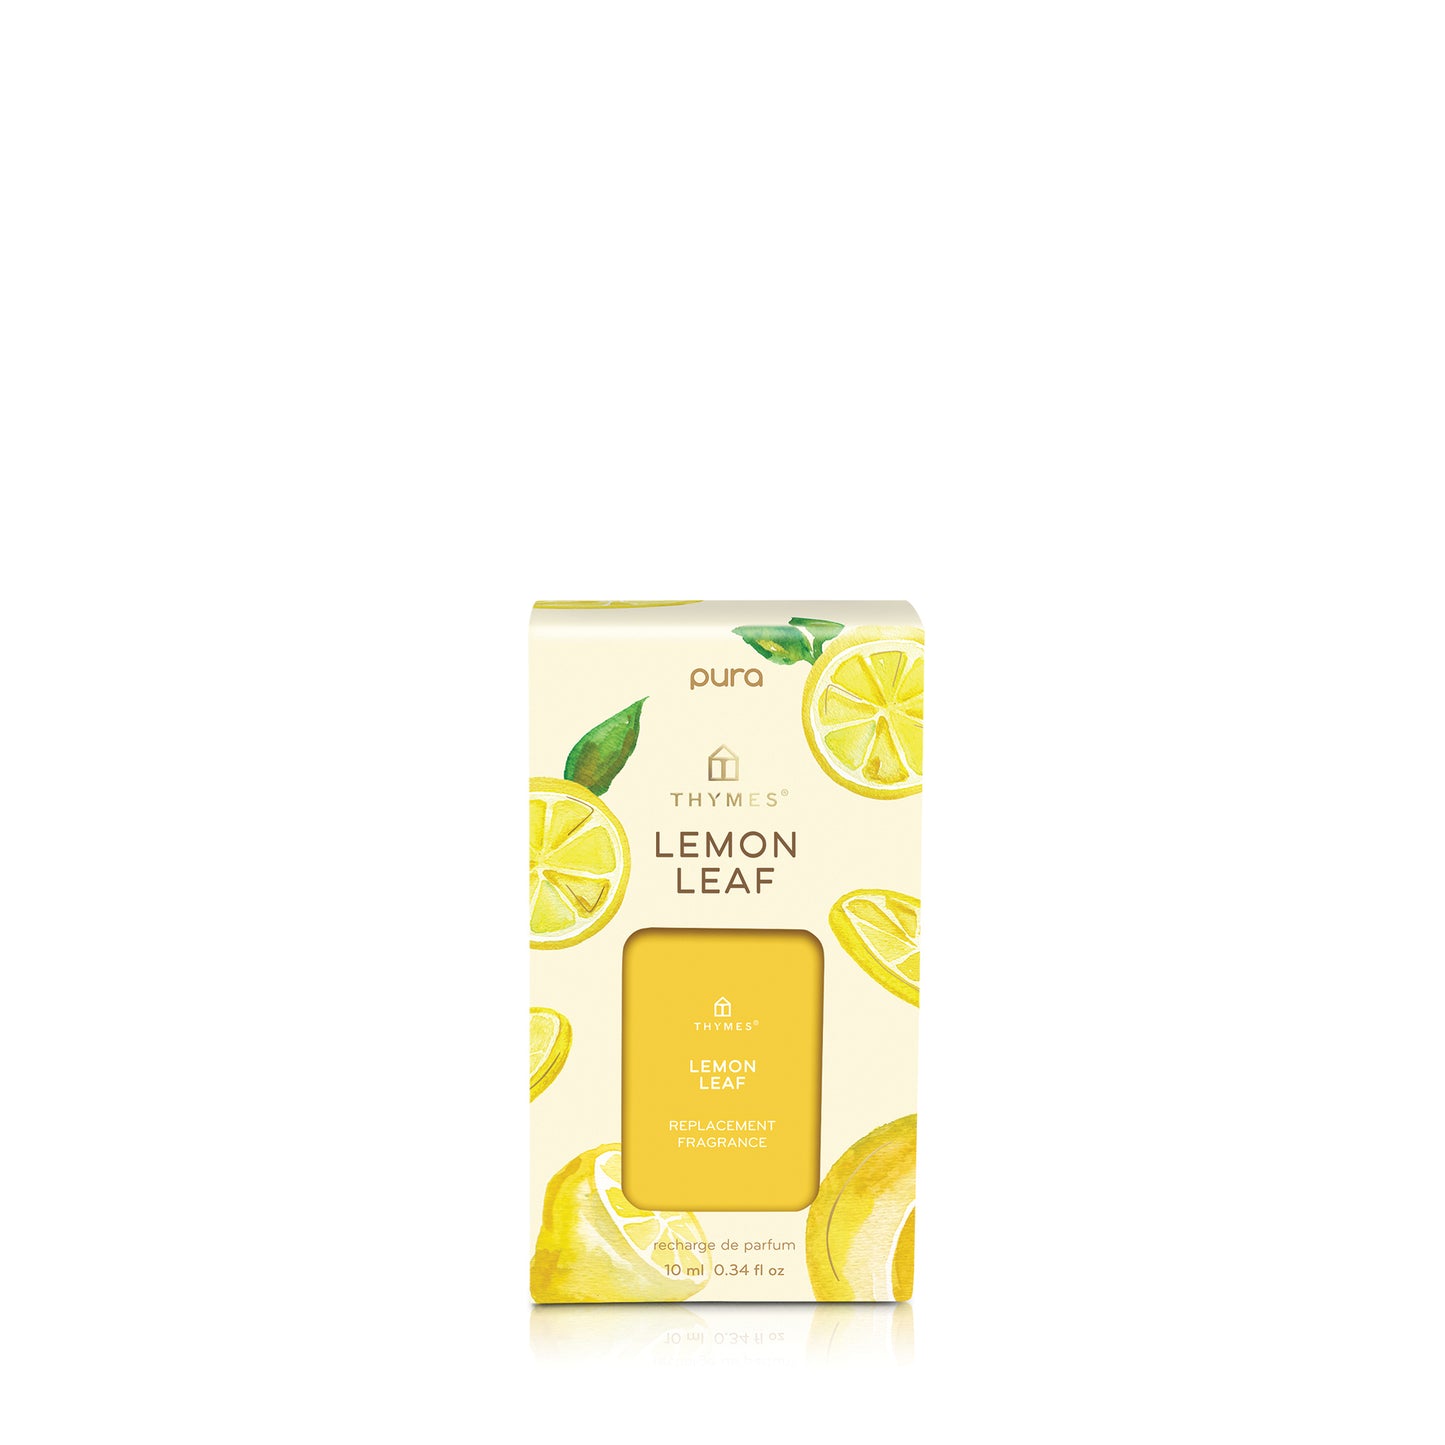 Lemon leaf and Mandarin Coriander Smart Home Diffuser set